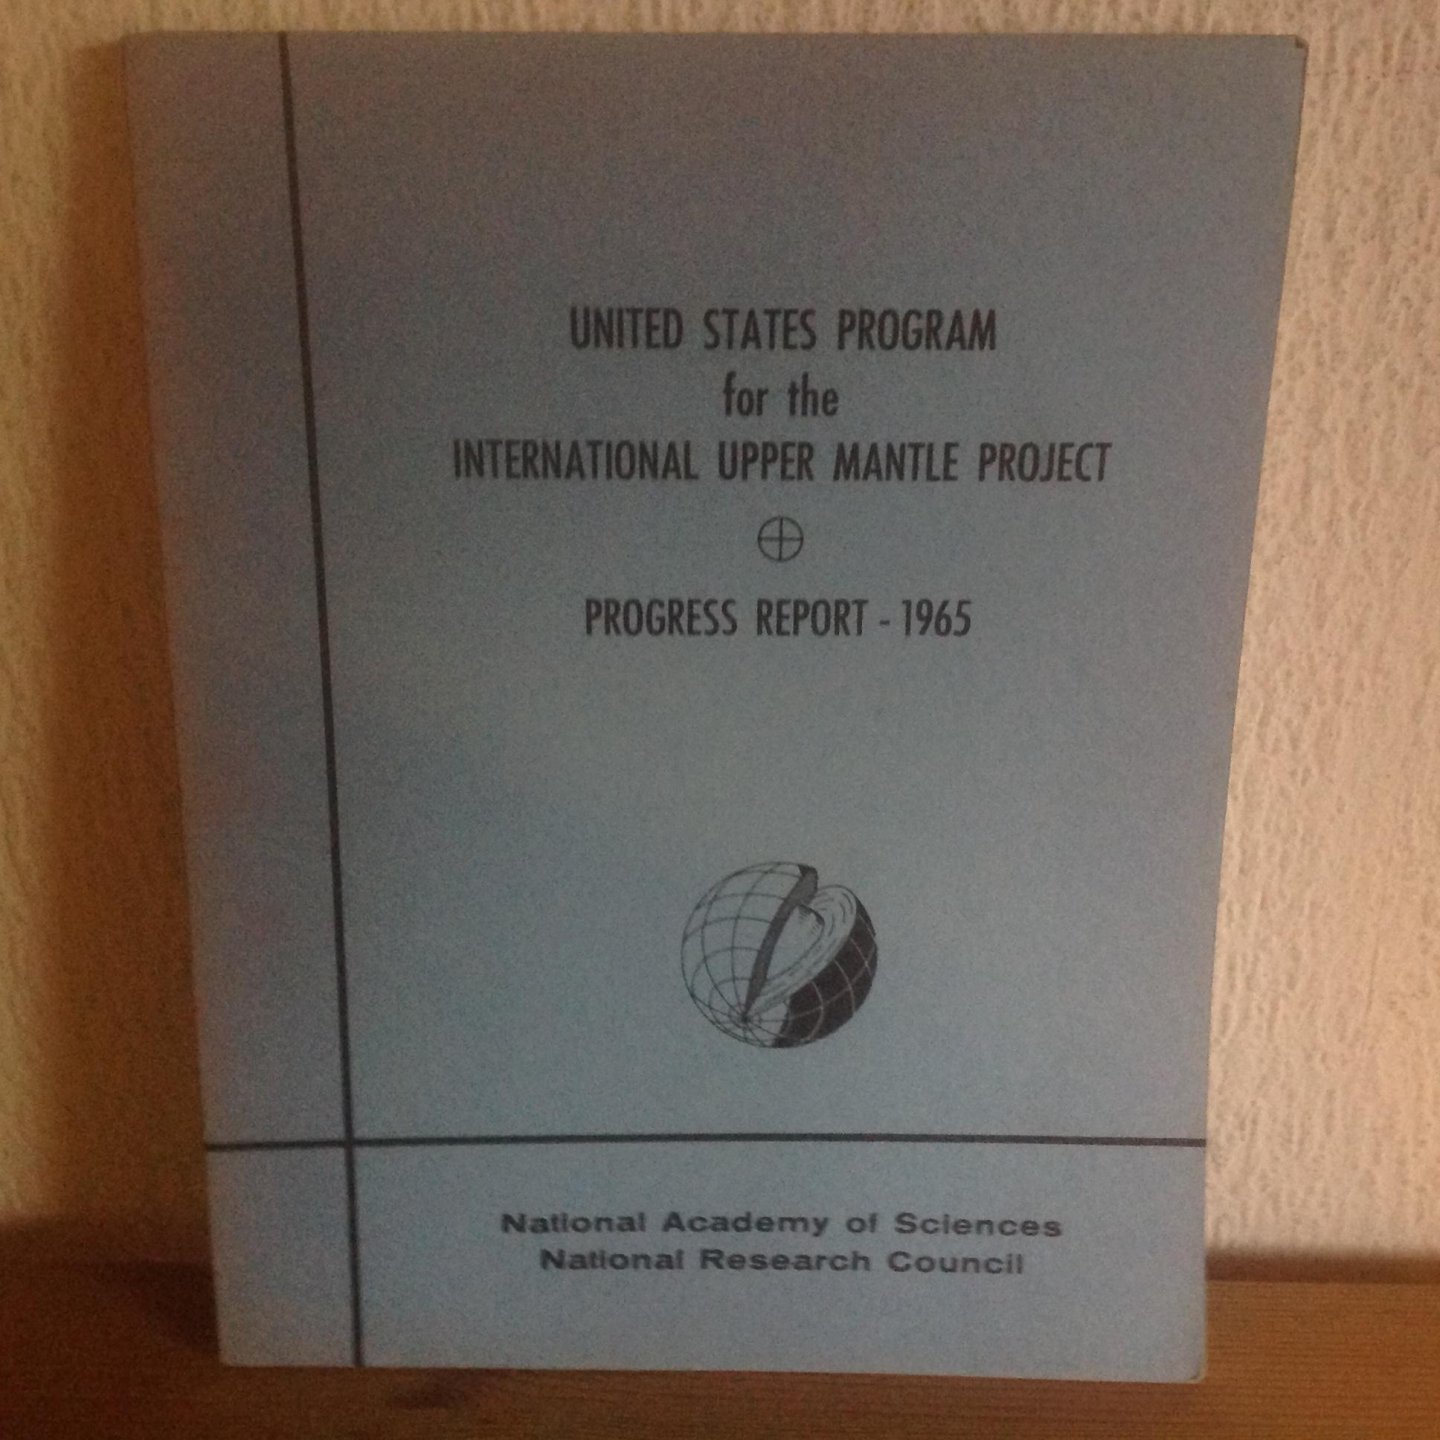  - United states Program for the international upper mantle Project,Progress report 1965